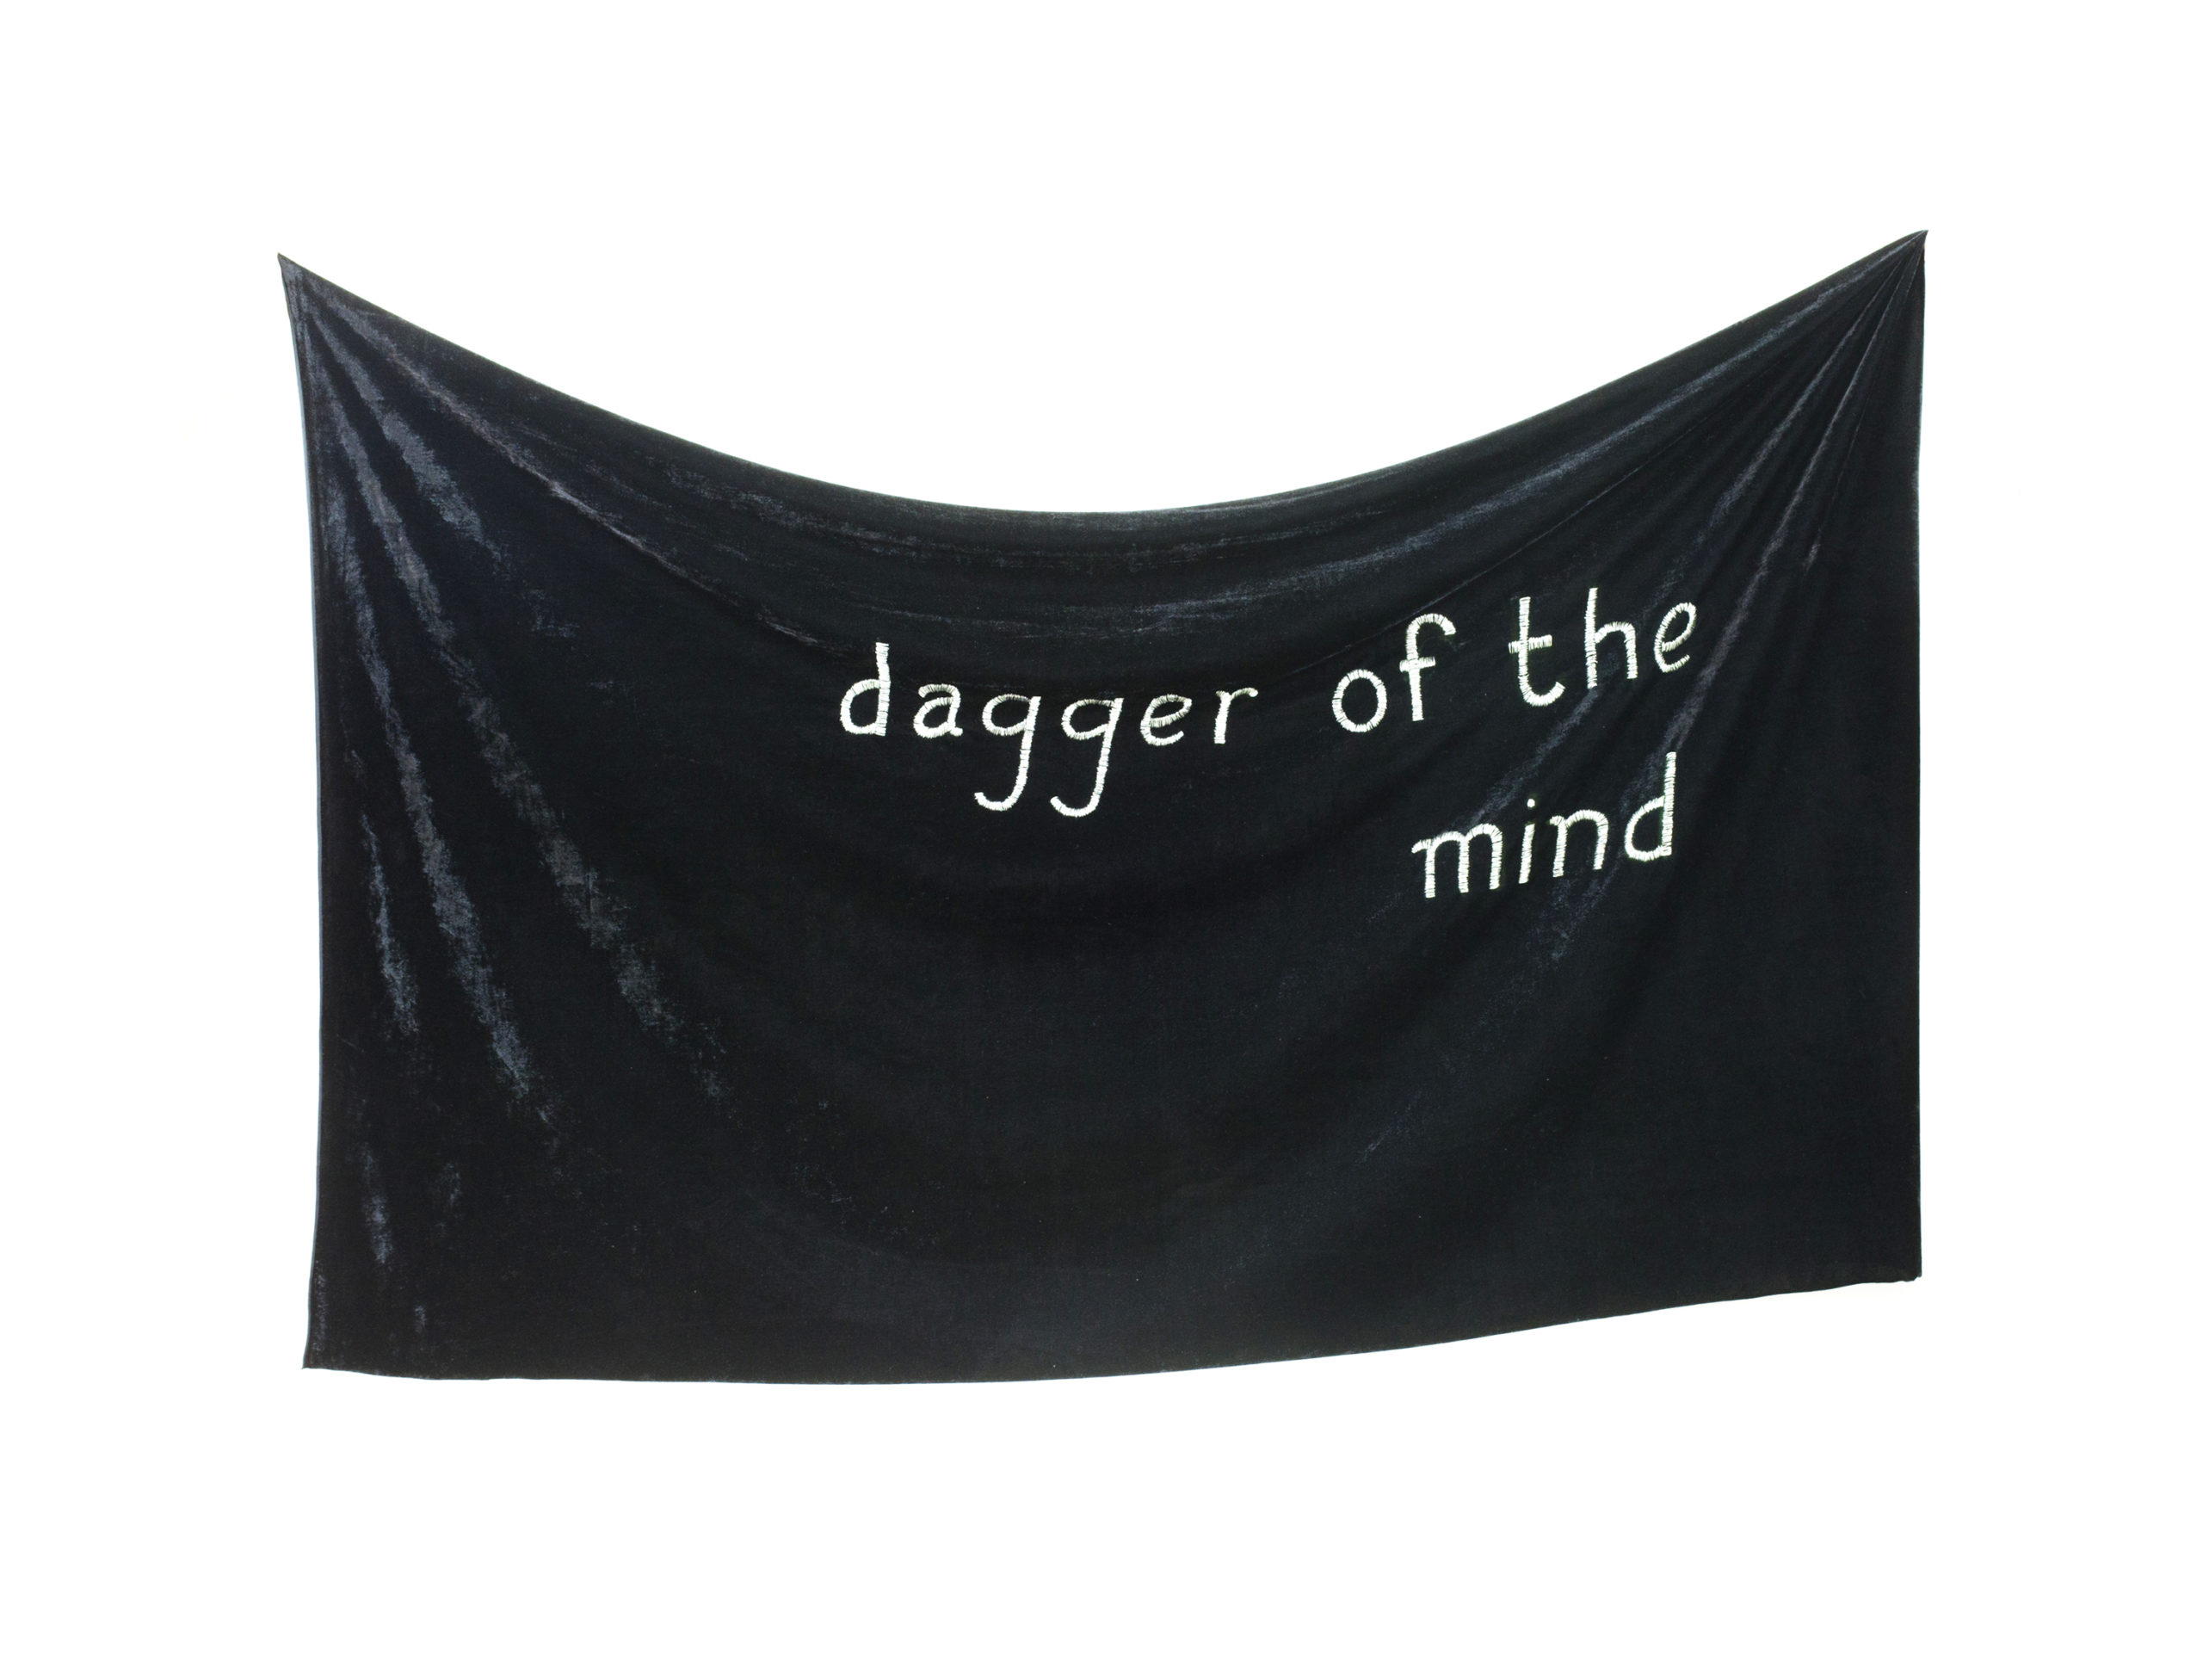 "Dagger of the mind" 2014, ricamo su tela